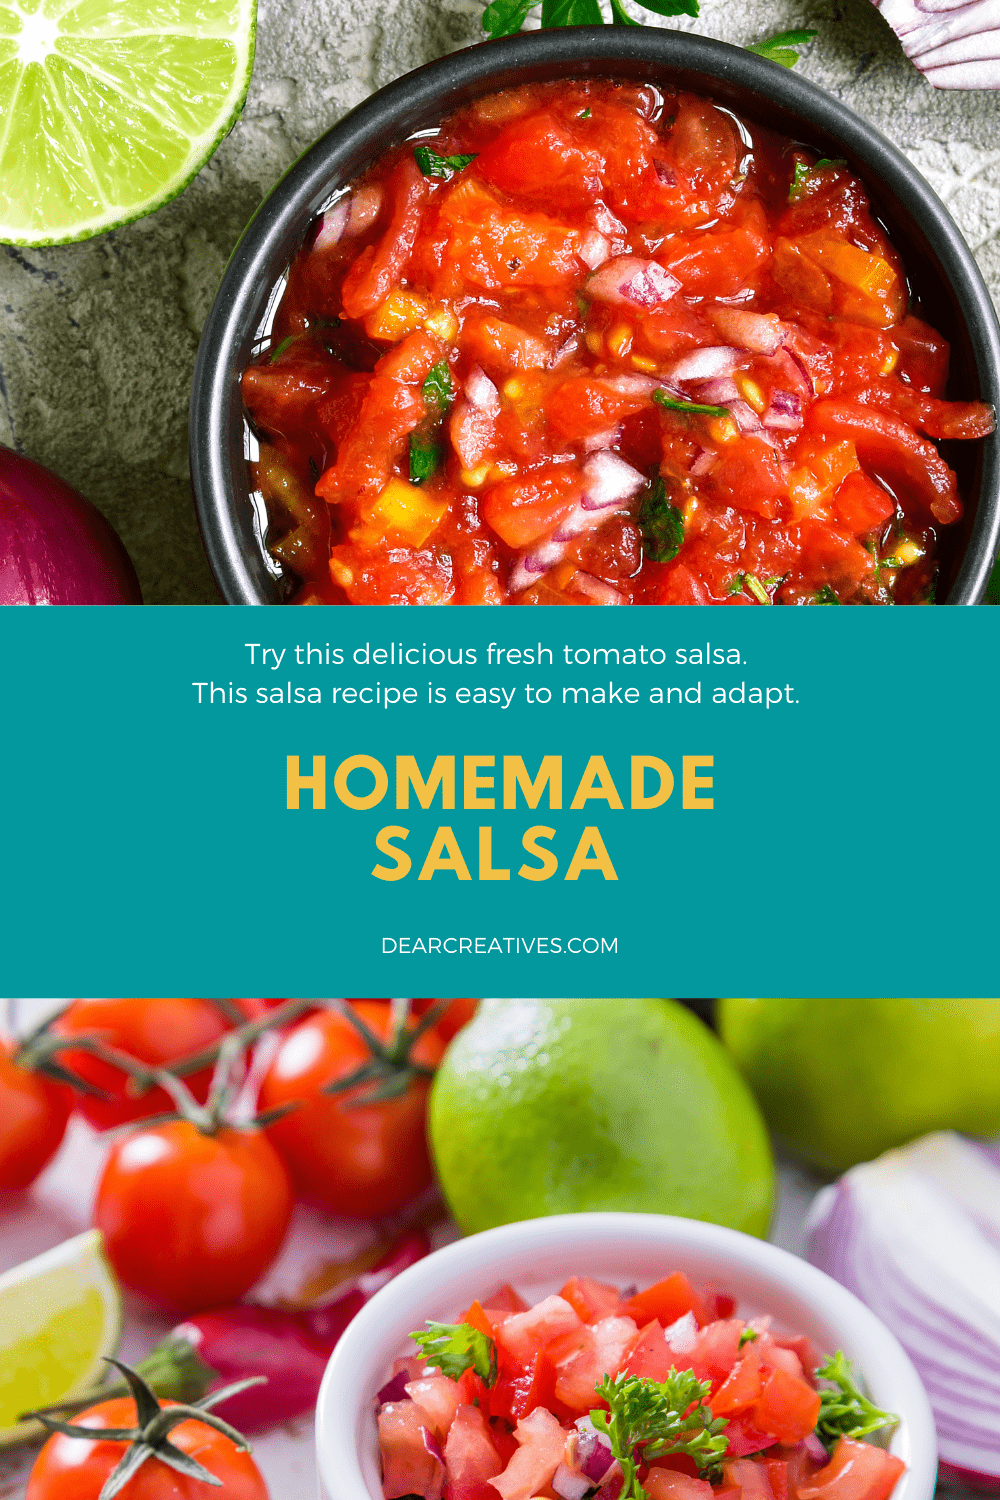 Homemade Salsa Recipe – Fresh, Tasty & Easy To Make!